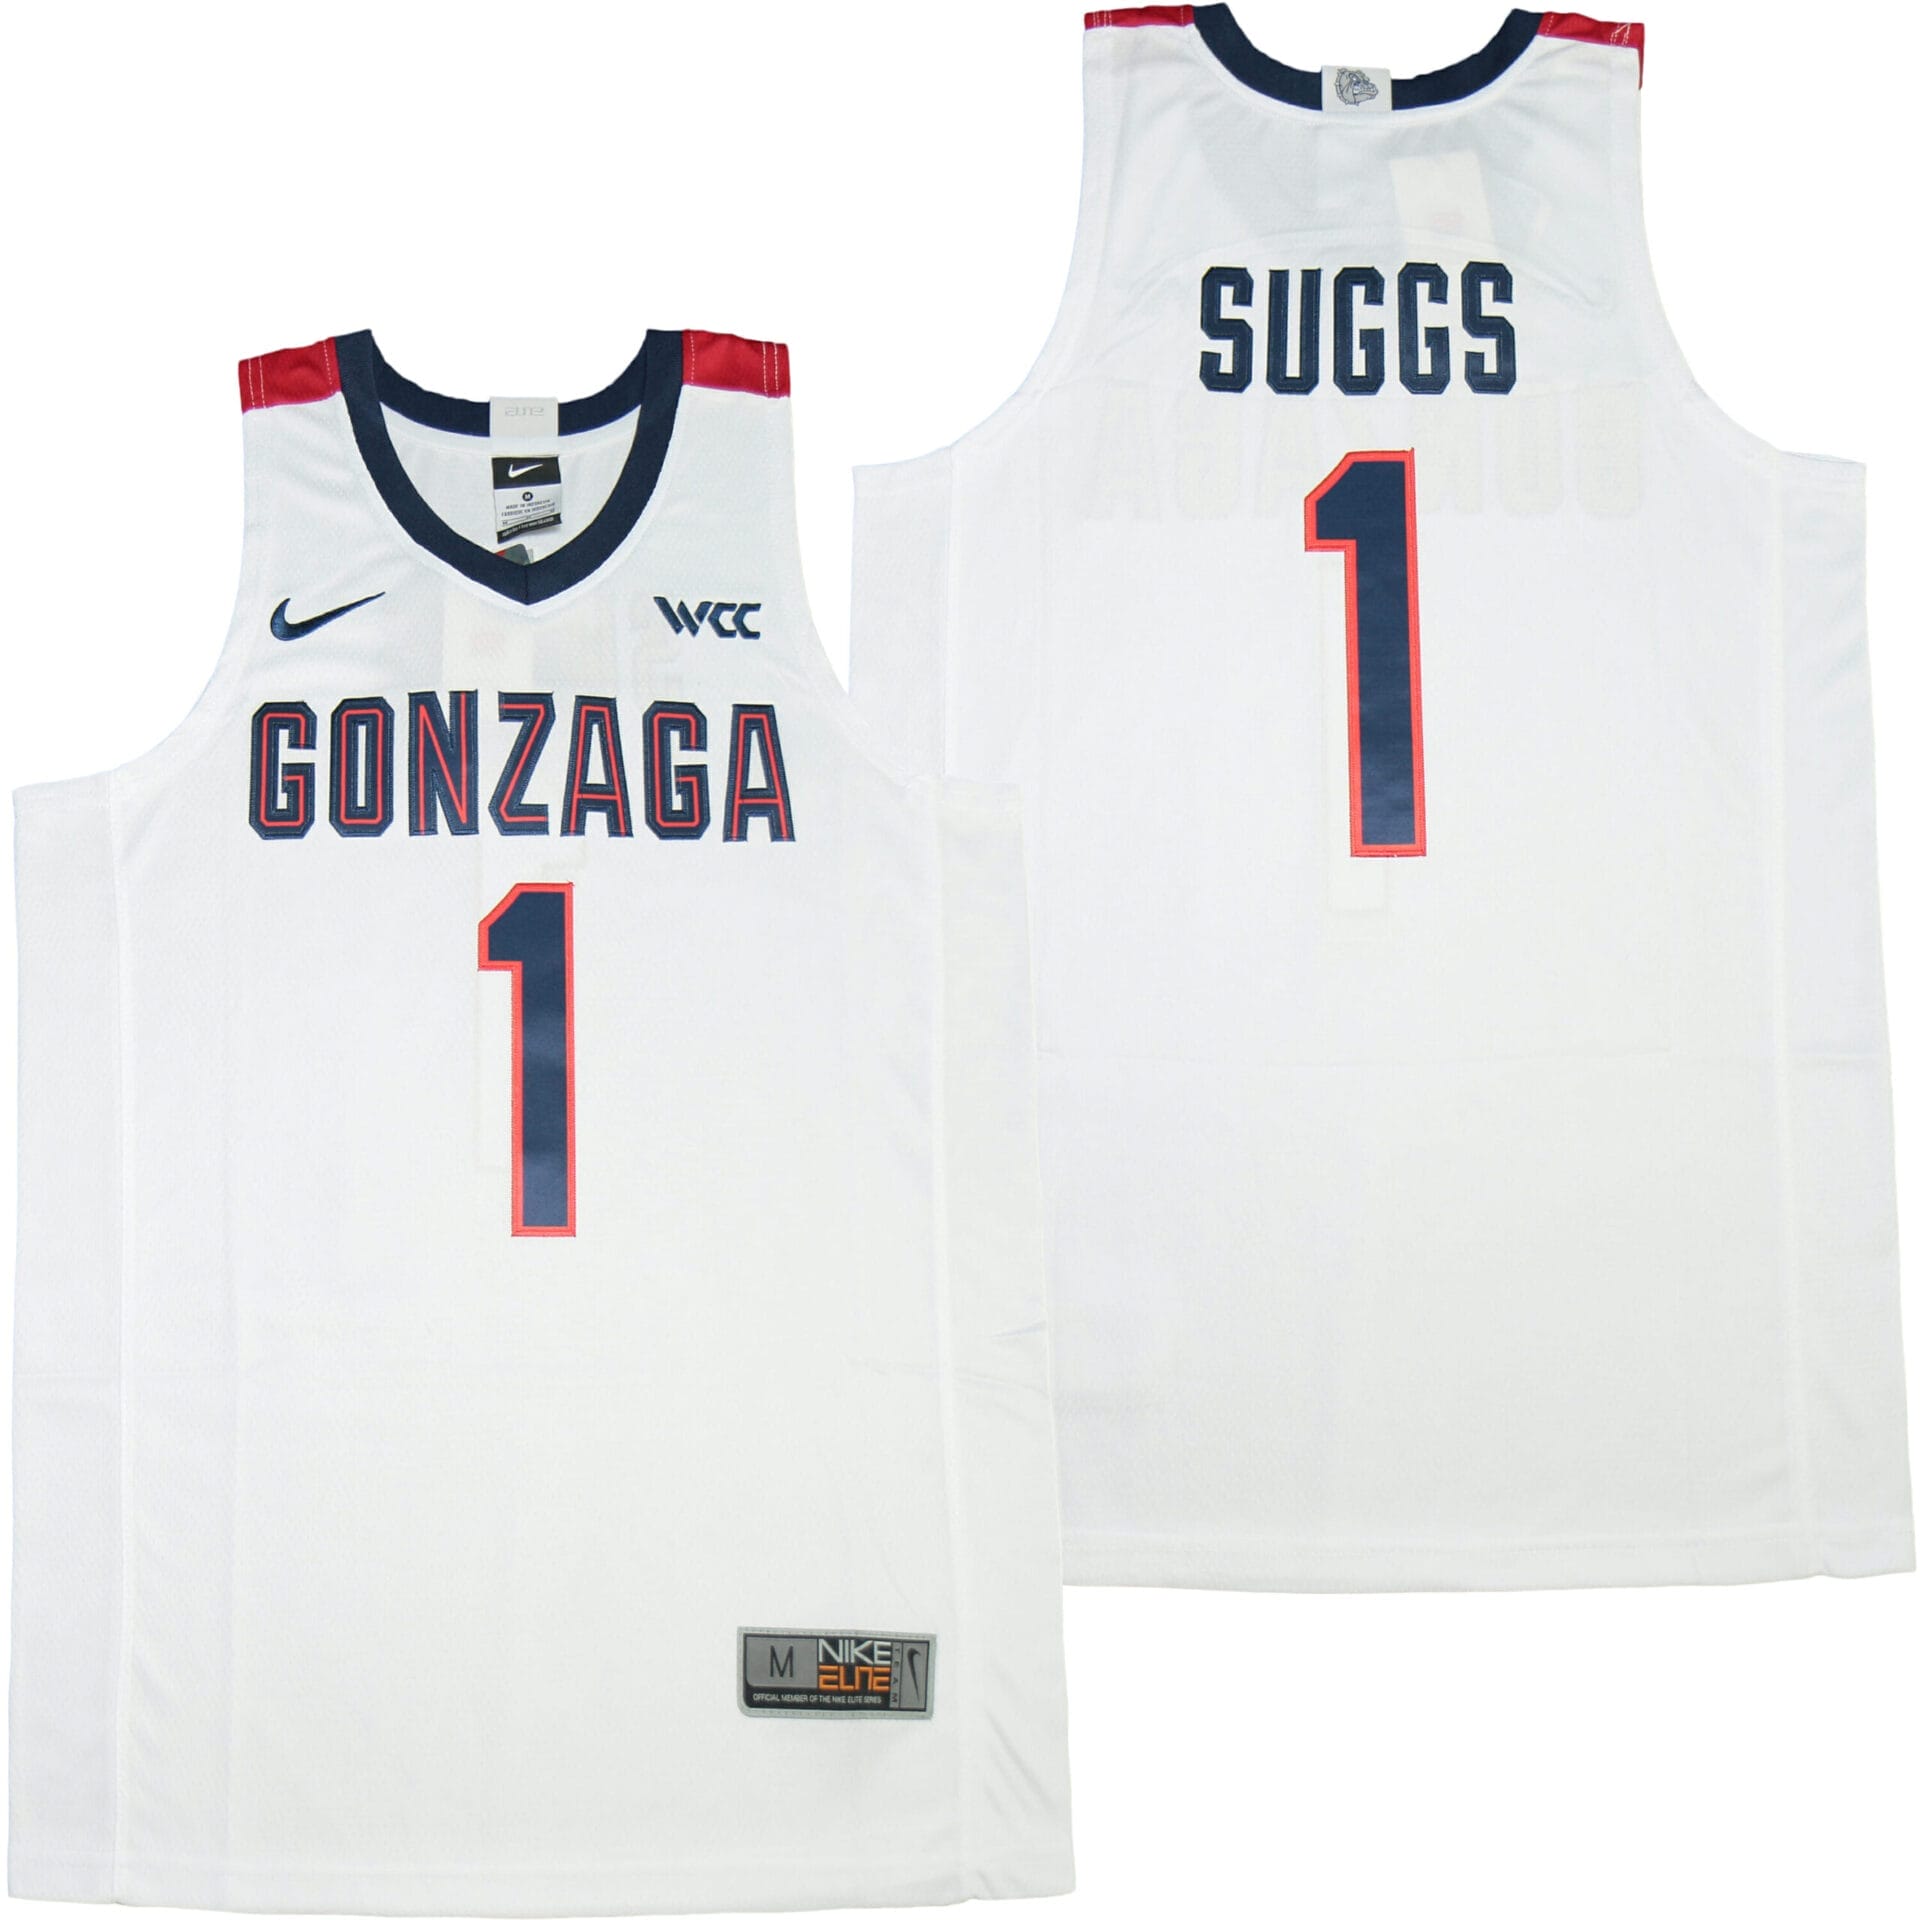 Nike Gonzaga Bulldogs #13 Basketball Jersey Sz. XL